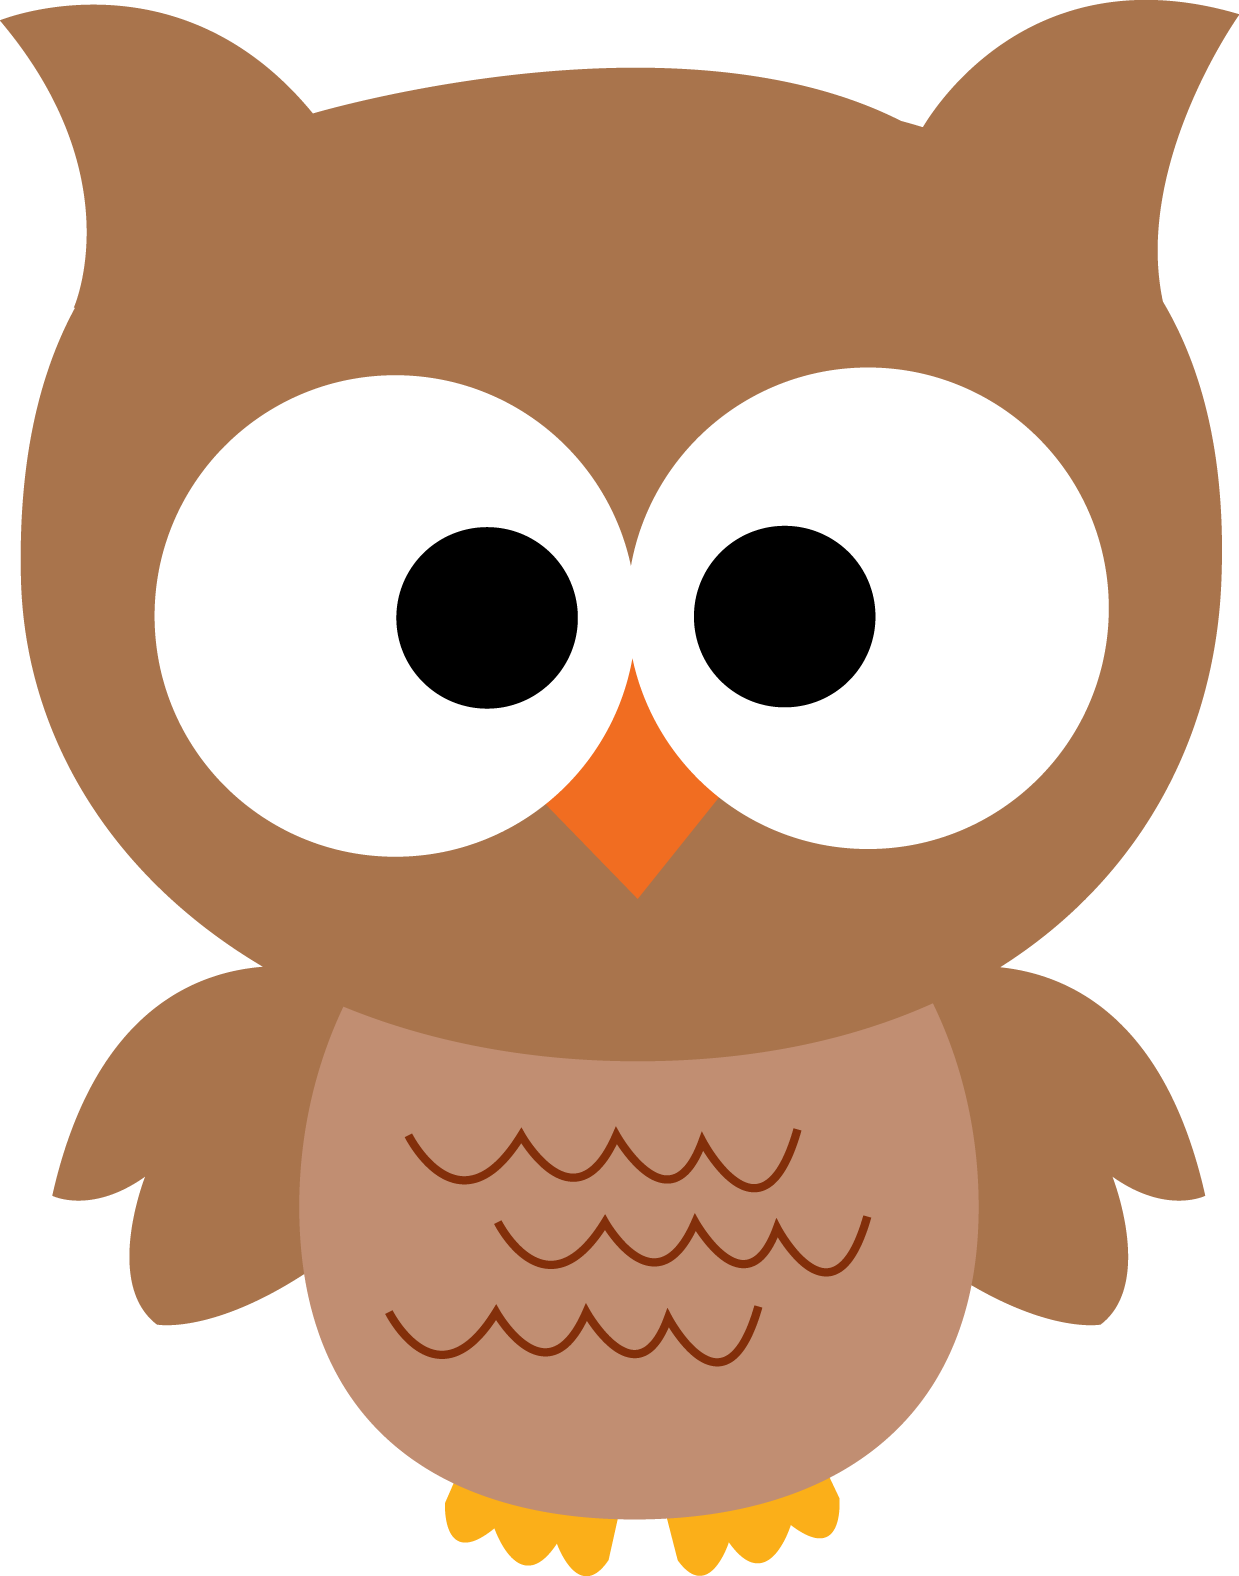 Cartoon owl clipart png